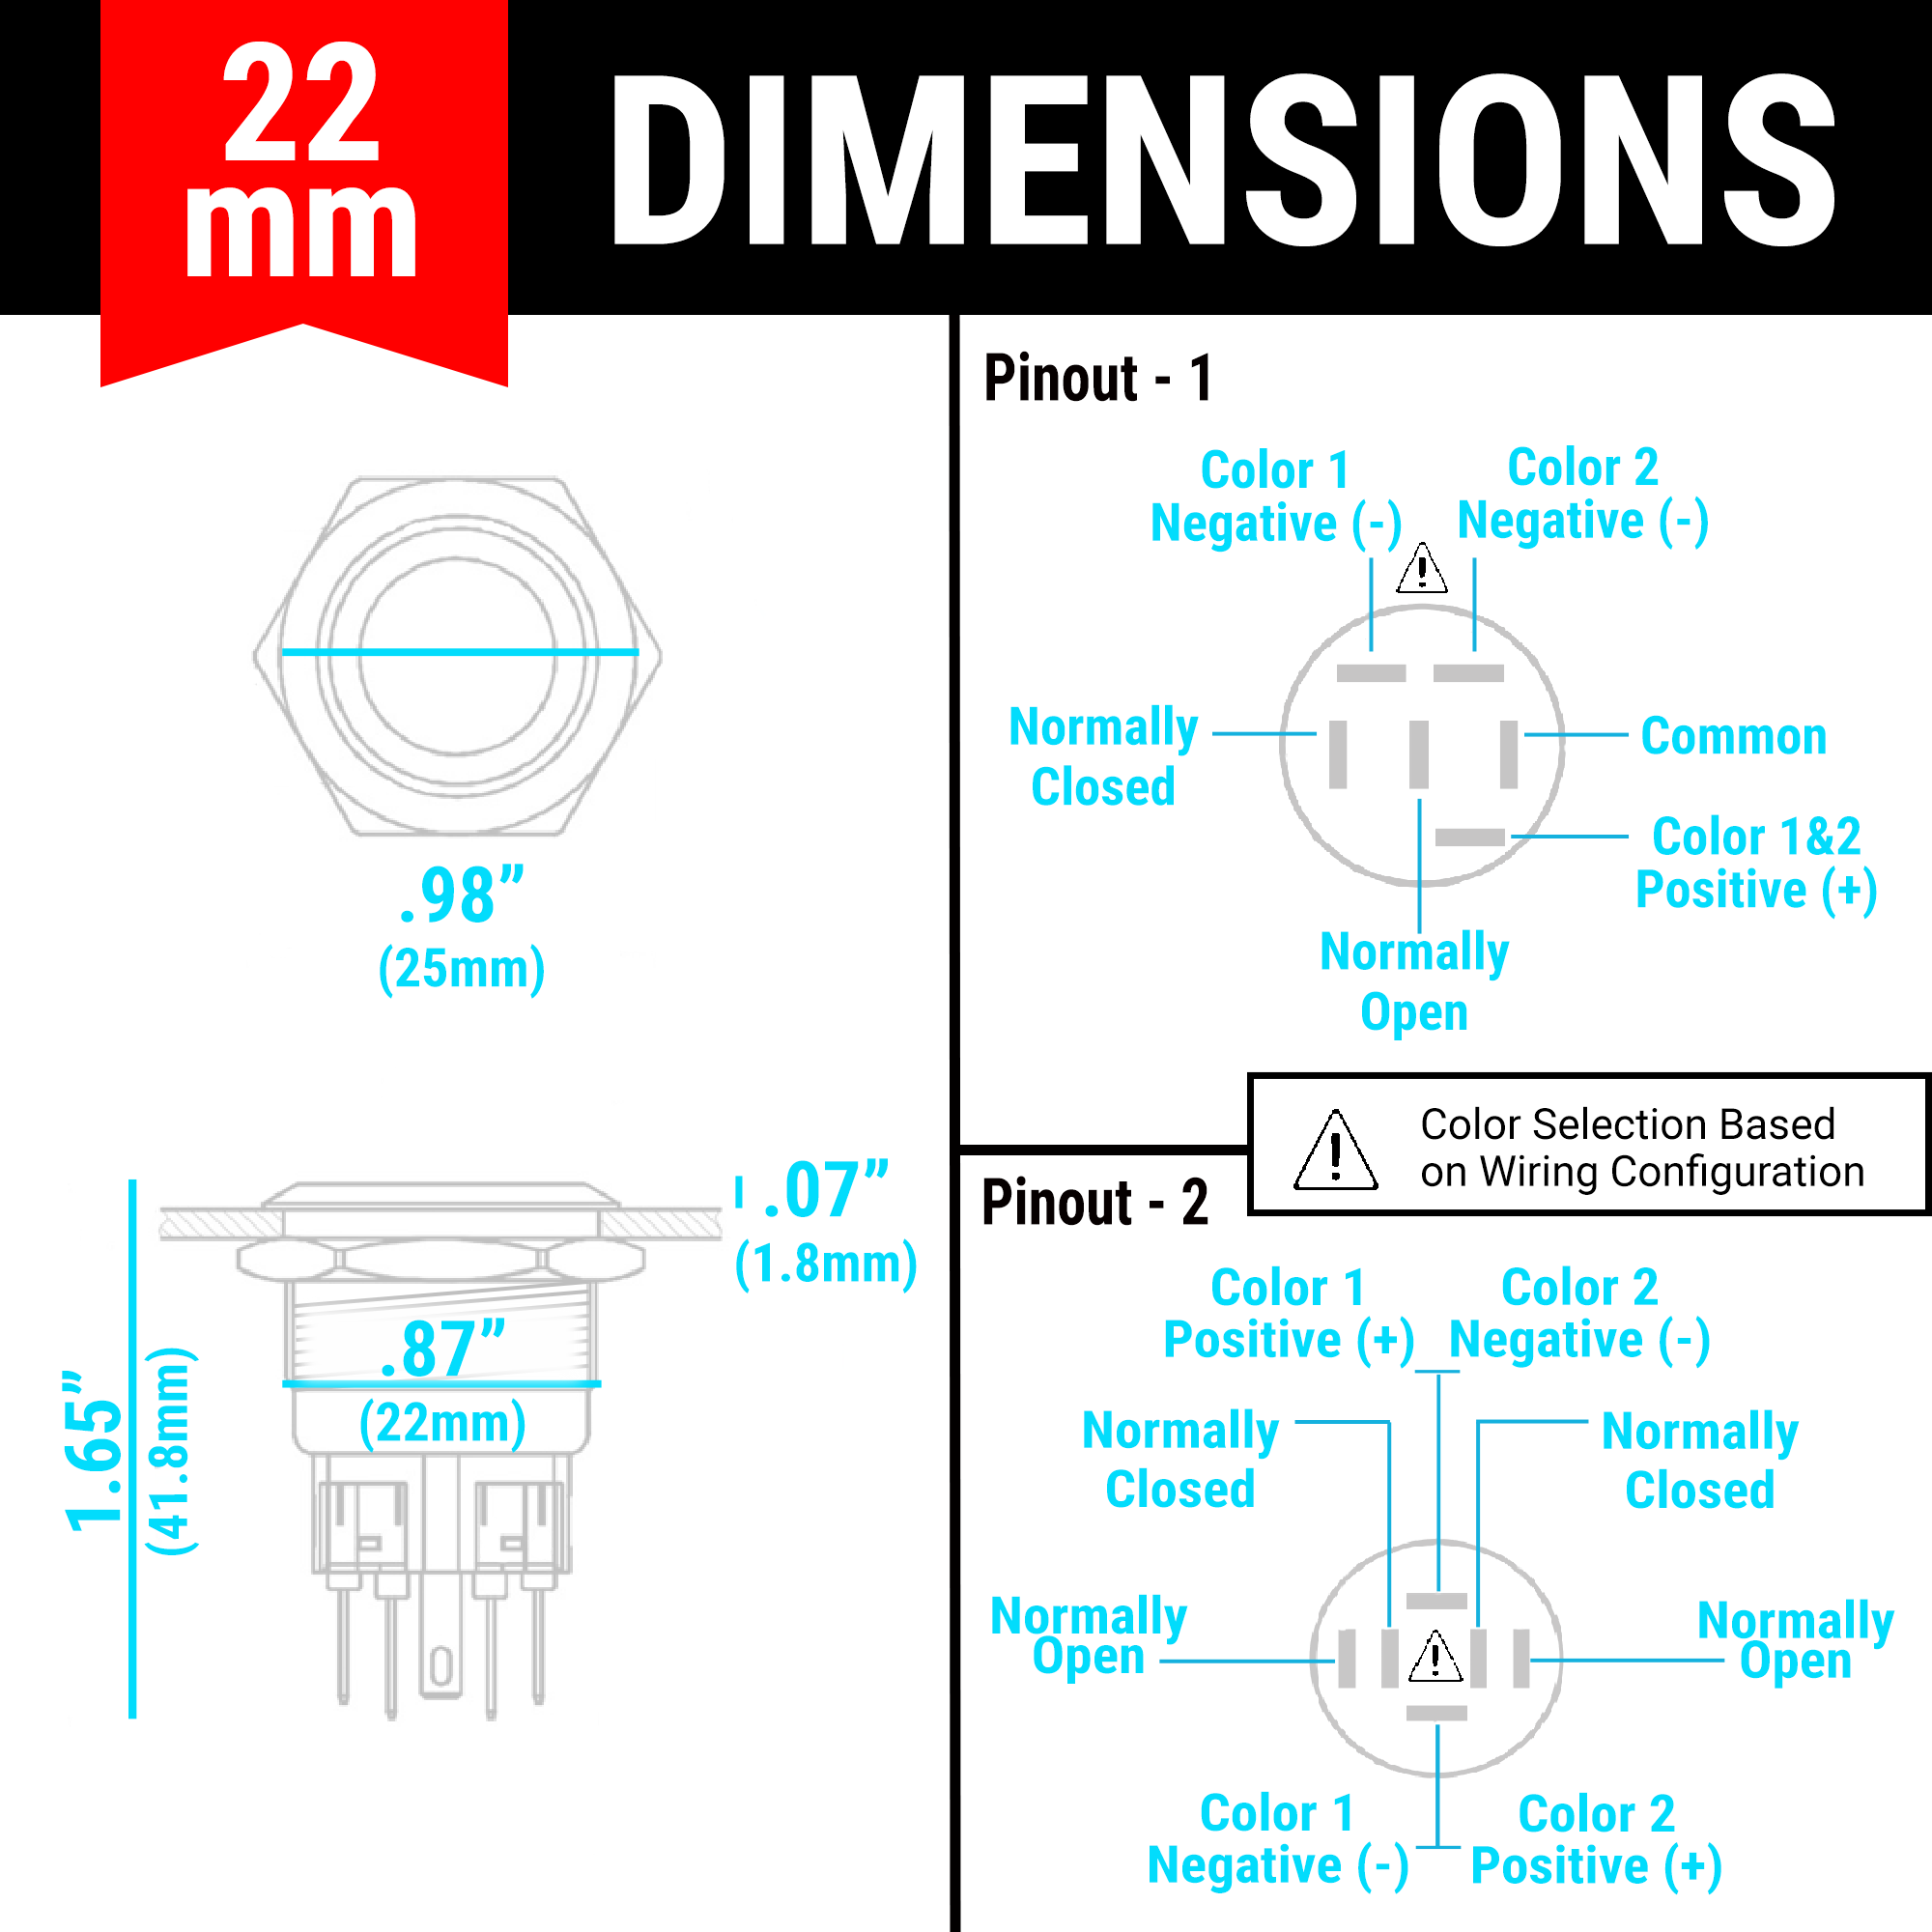 22mm Dimensions